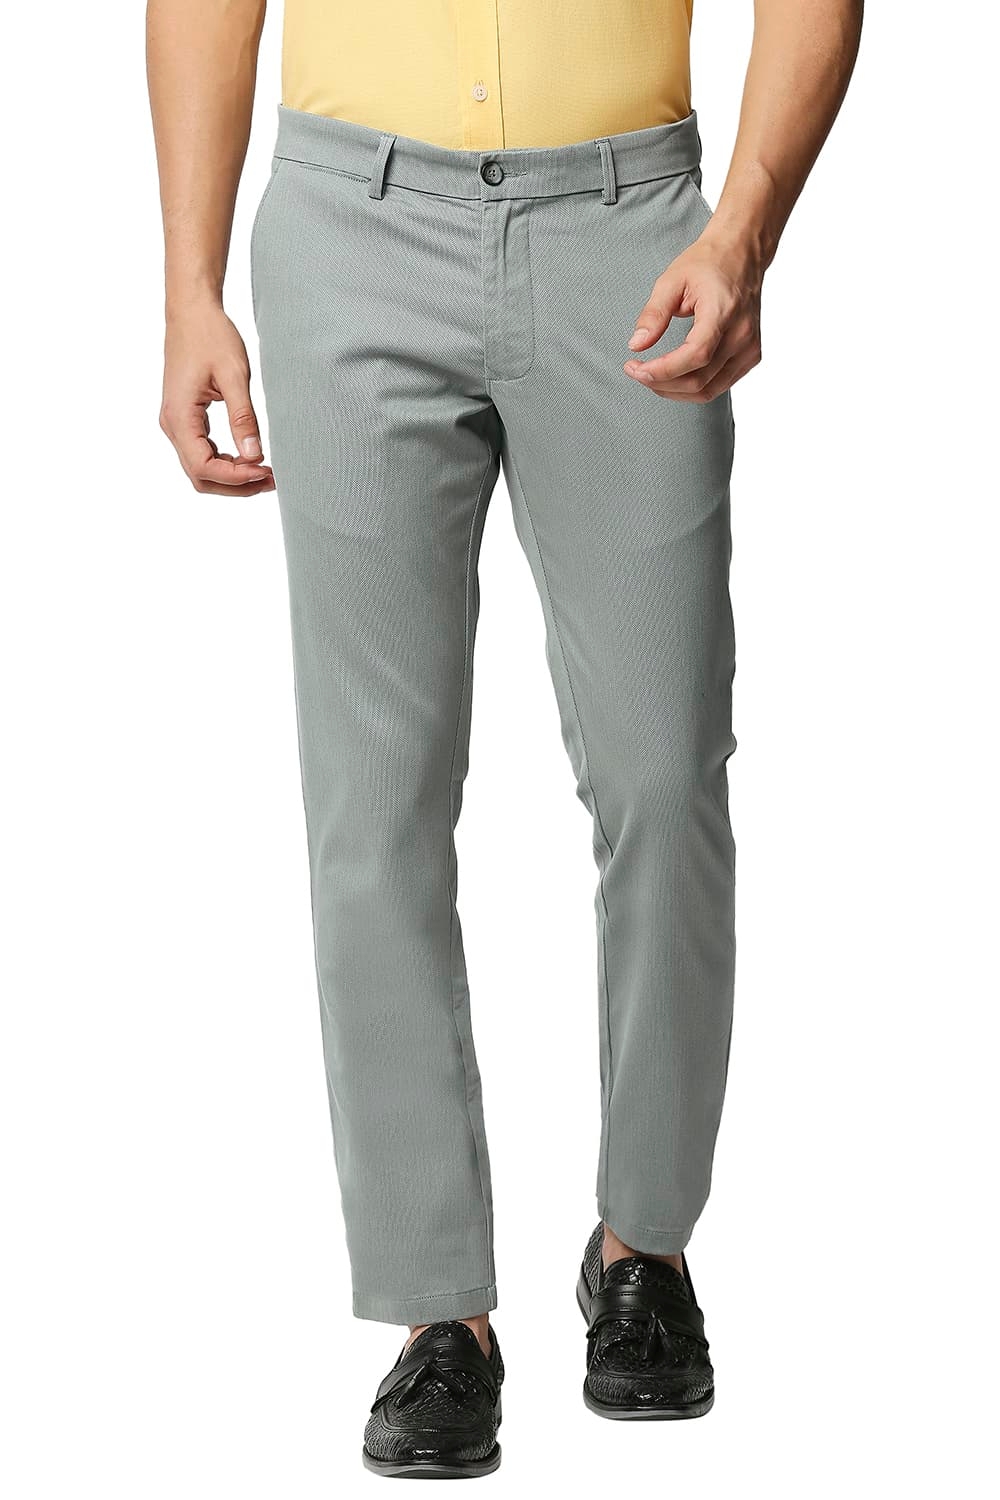 Basics | Men's Mid Grey Cotton Blend Printed Trouser 0